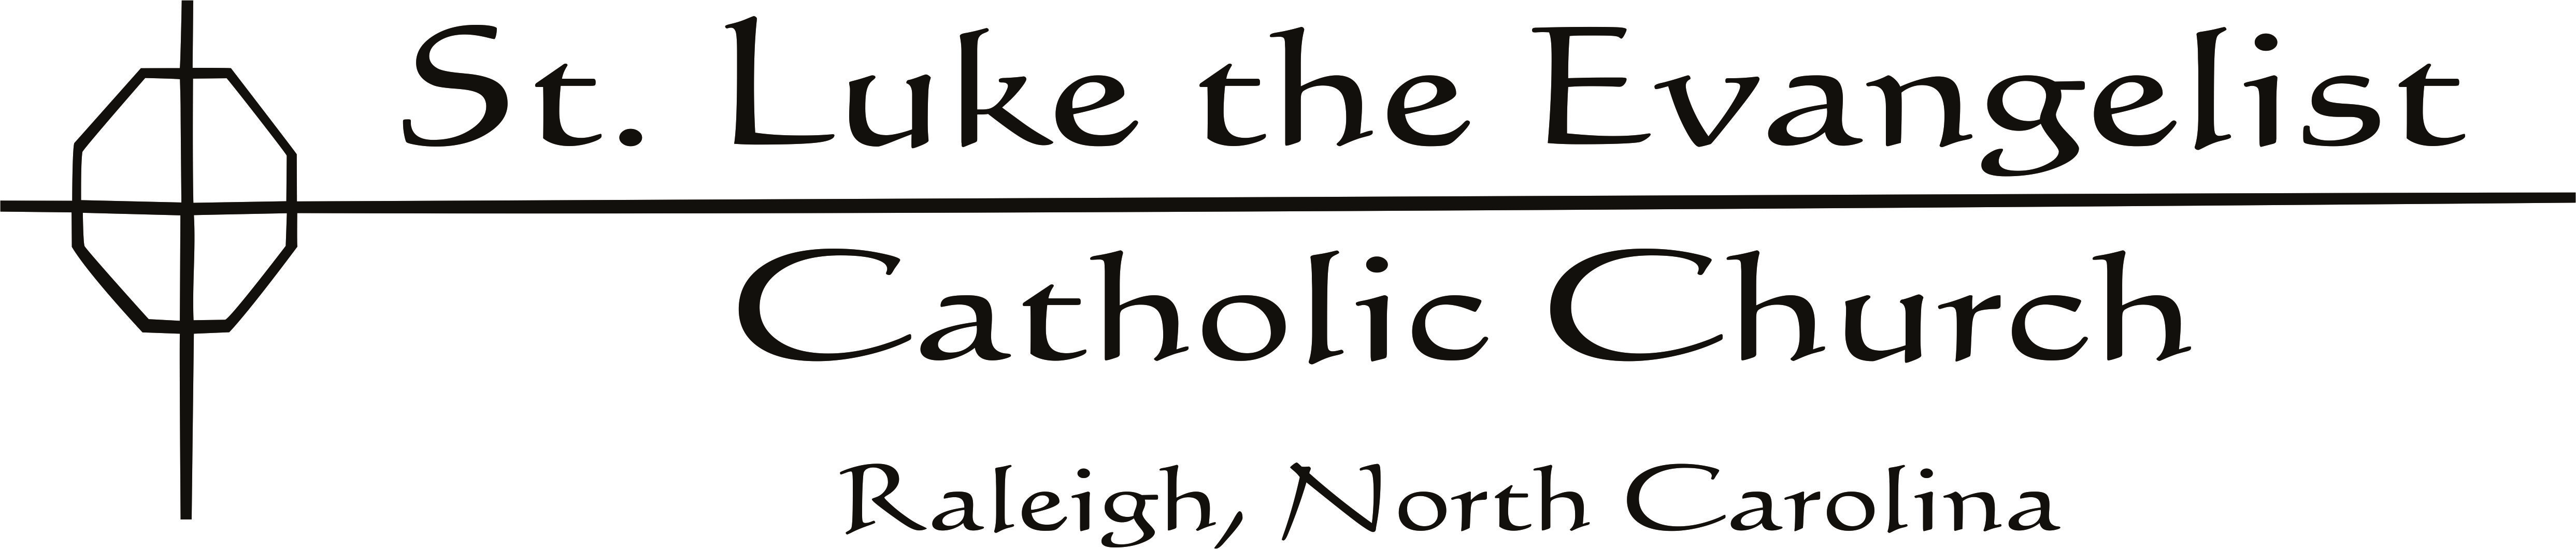 Sponsor St. Luke The Evangelist Catholic Church